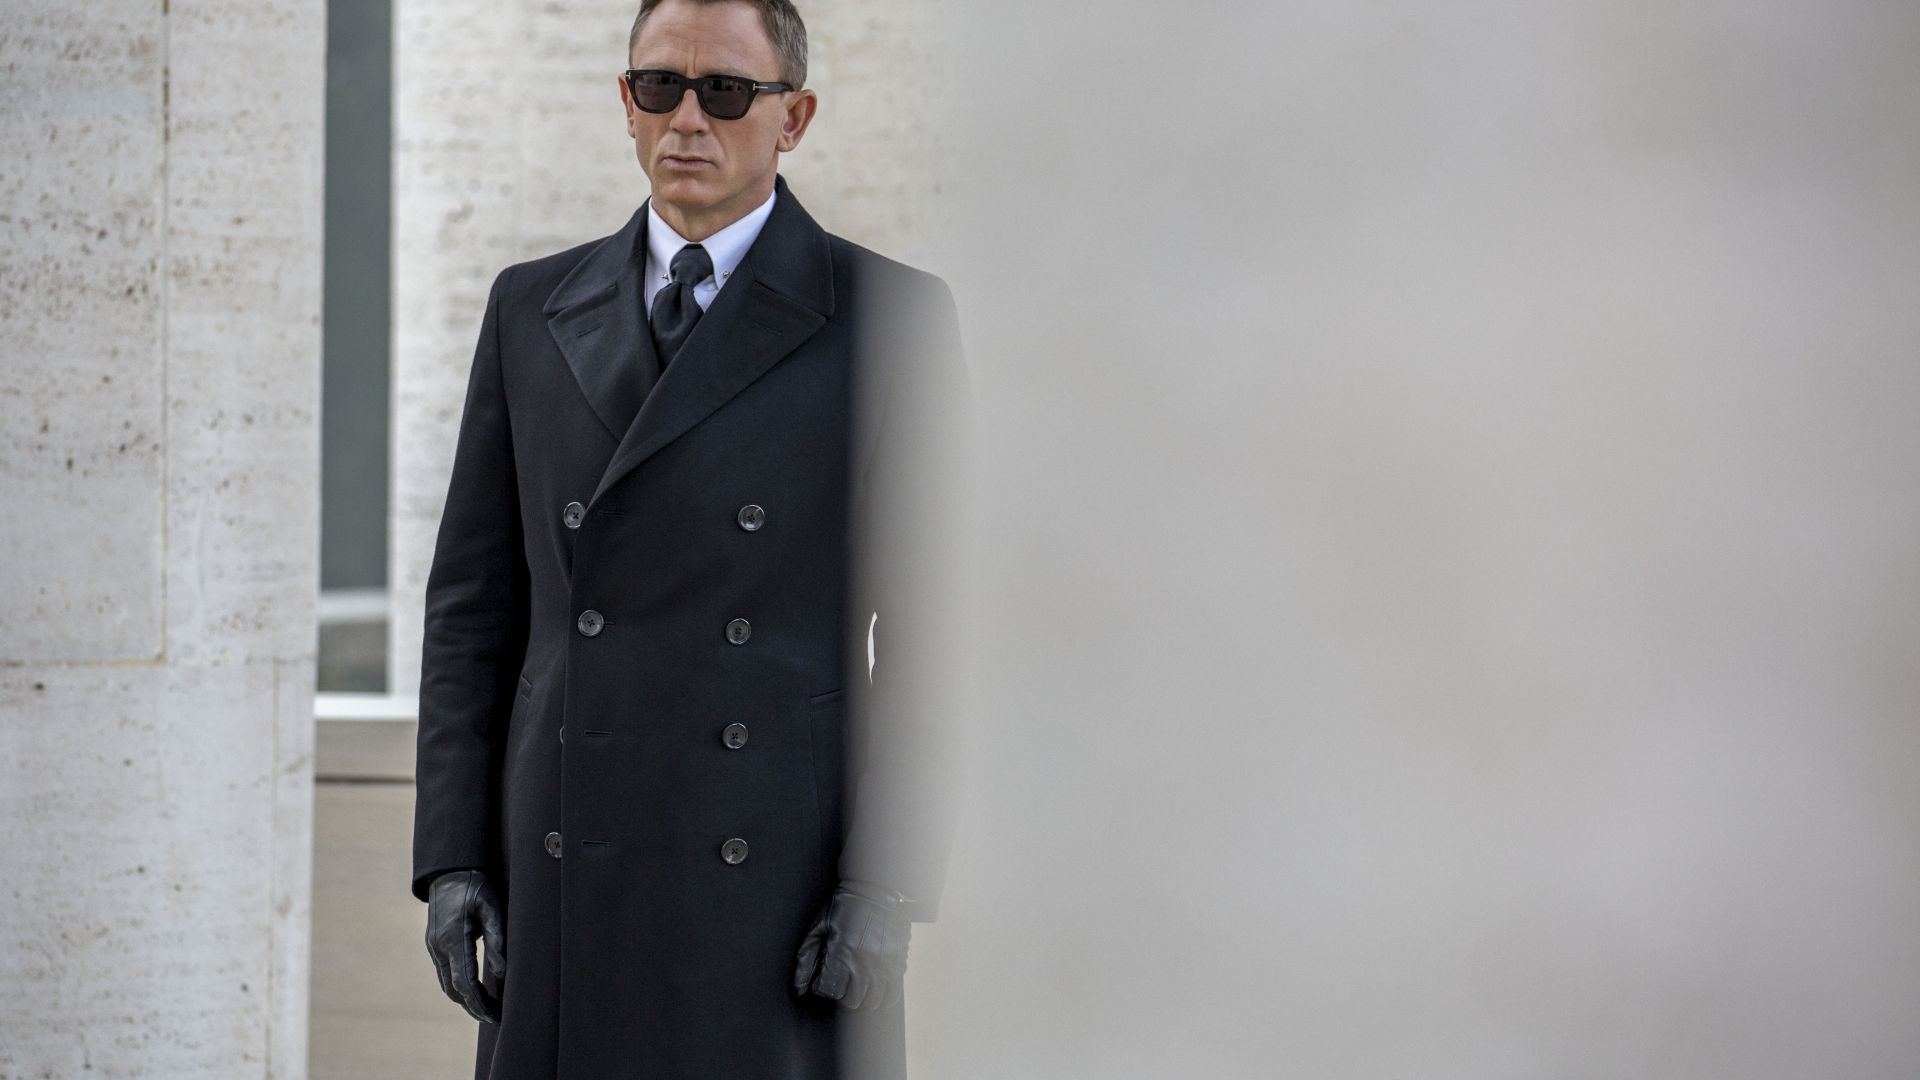 007: СПЕКТР, кино, Дэниэл Крэйг, Spectre, 007, movie, Daniel Craig (horizontal)